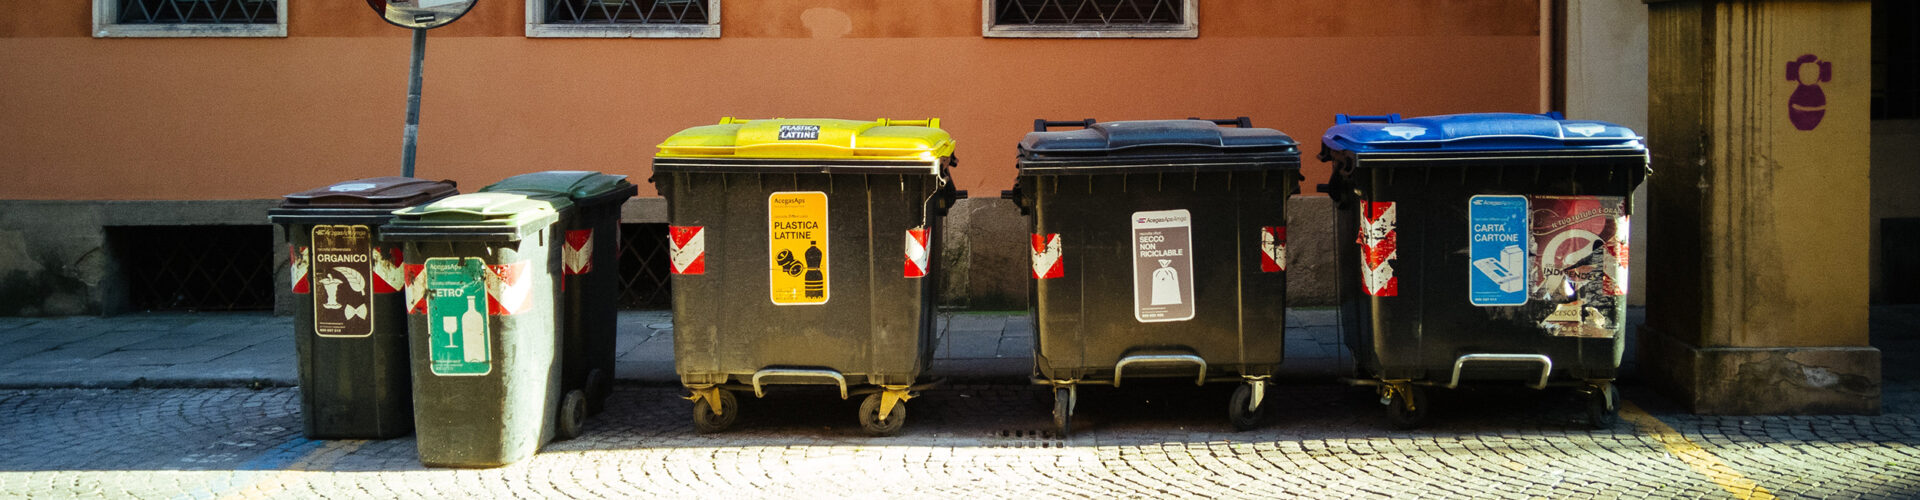 Trash bins lined up against brick building